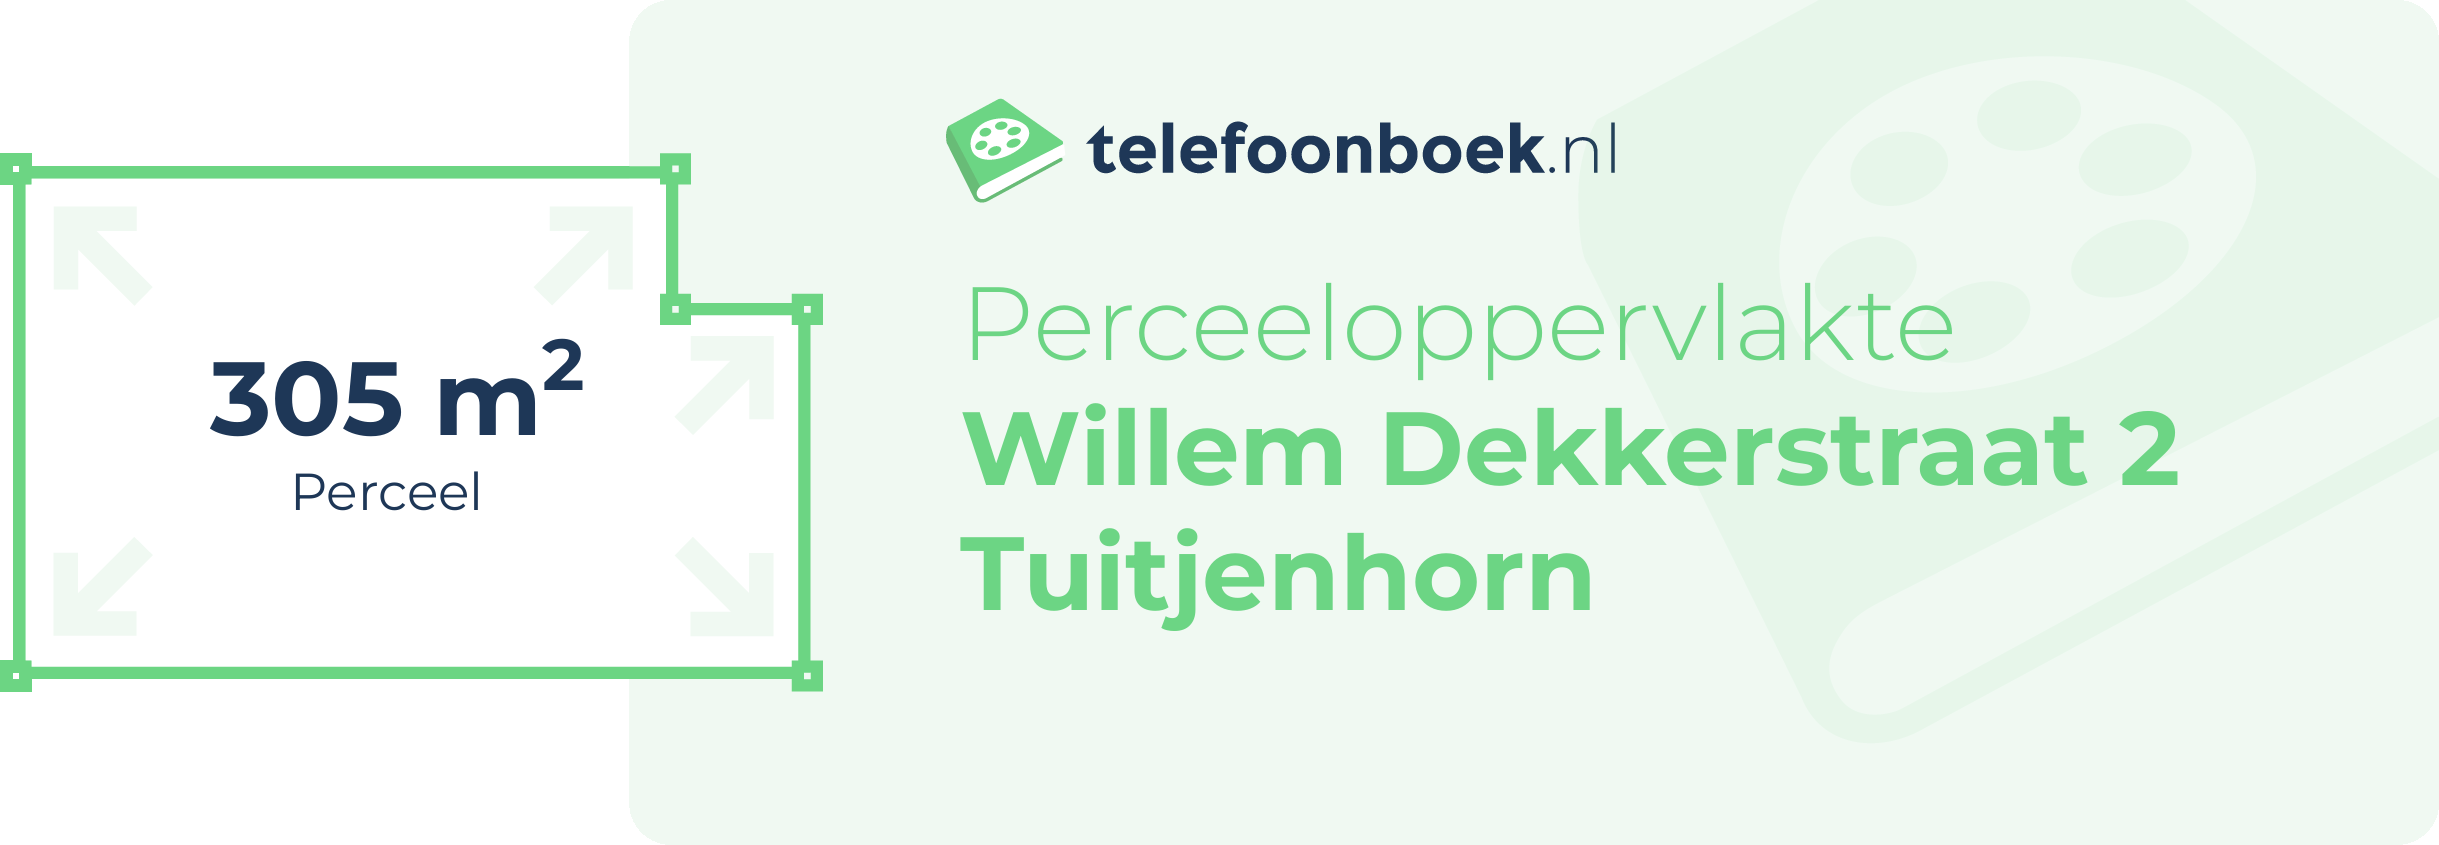 Perceeloppervlakte Willem Dekkerstraat 2 Tuitjenhorn